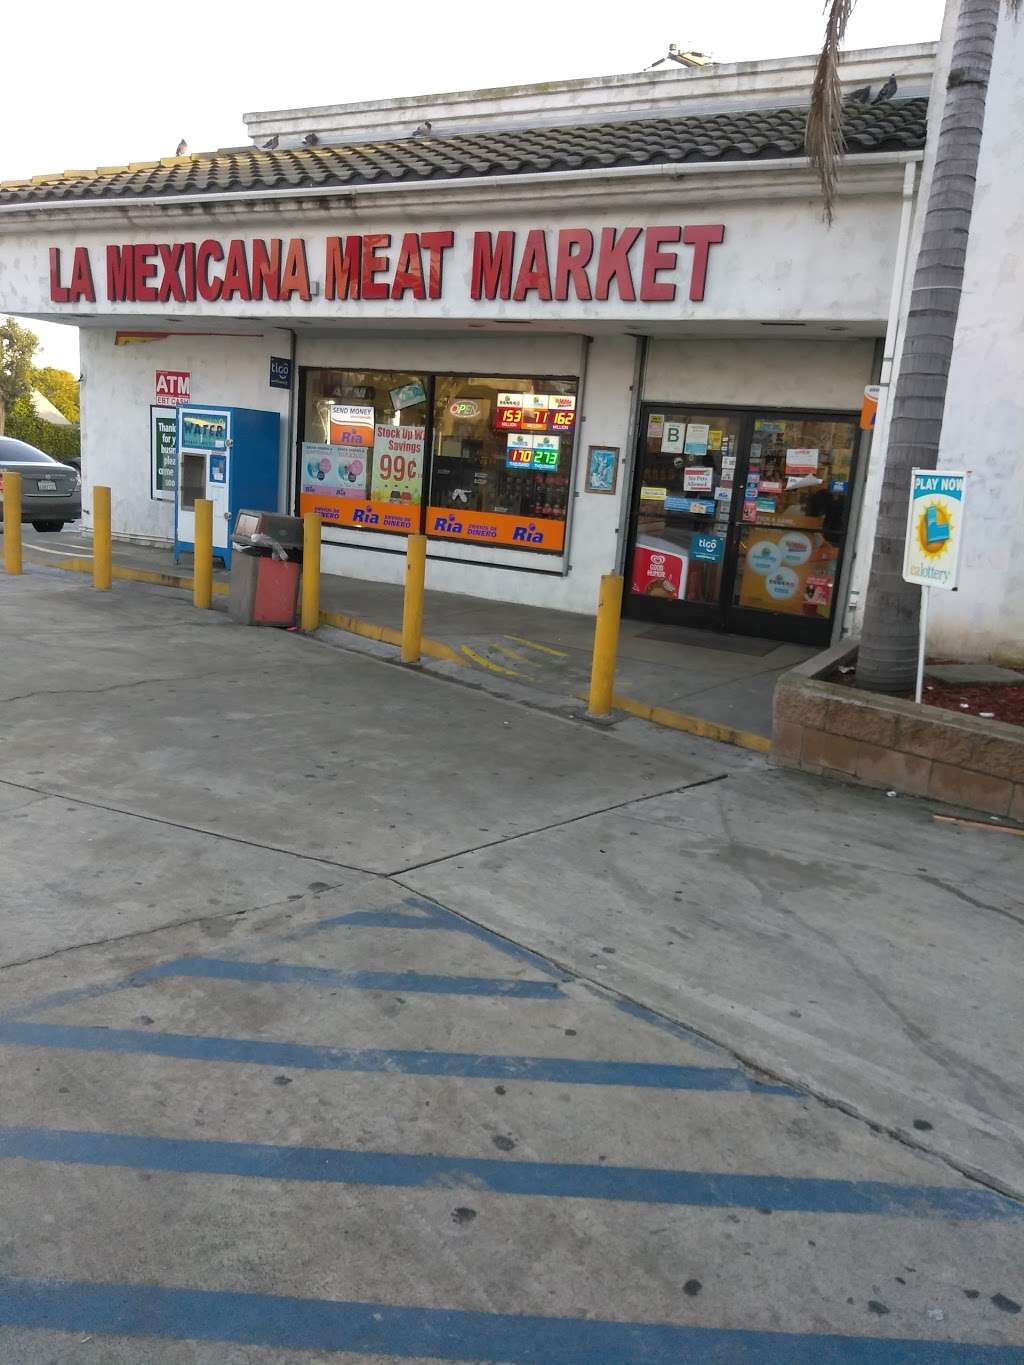 La Nueva Mexicana Meat Market | 736 E Hyde Park Blvd, Inglewood, CA 90302, USA | Phone: (310) 590-1150